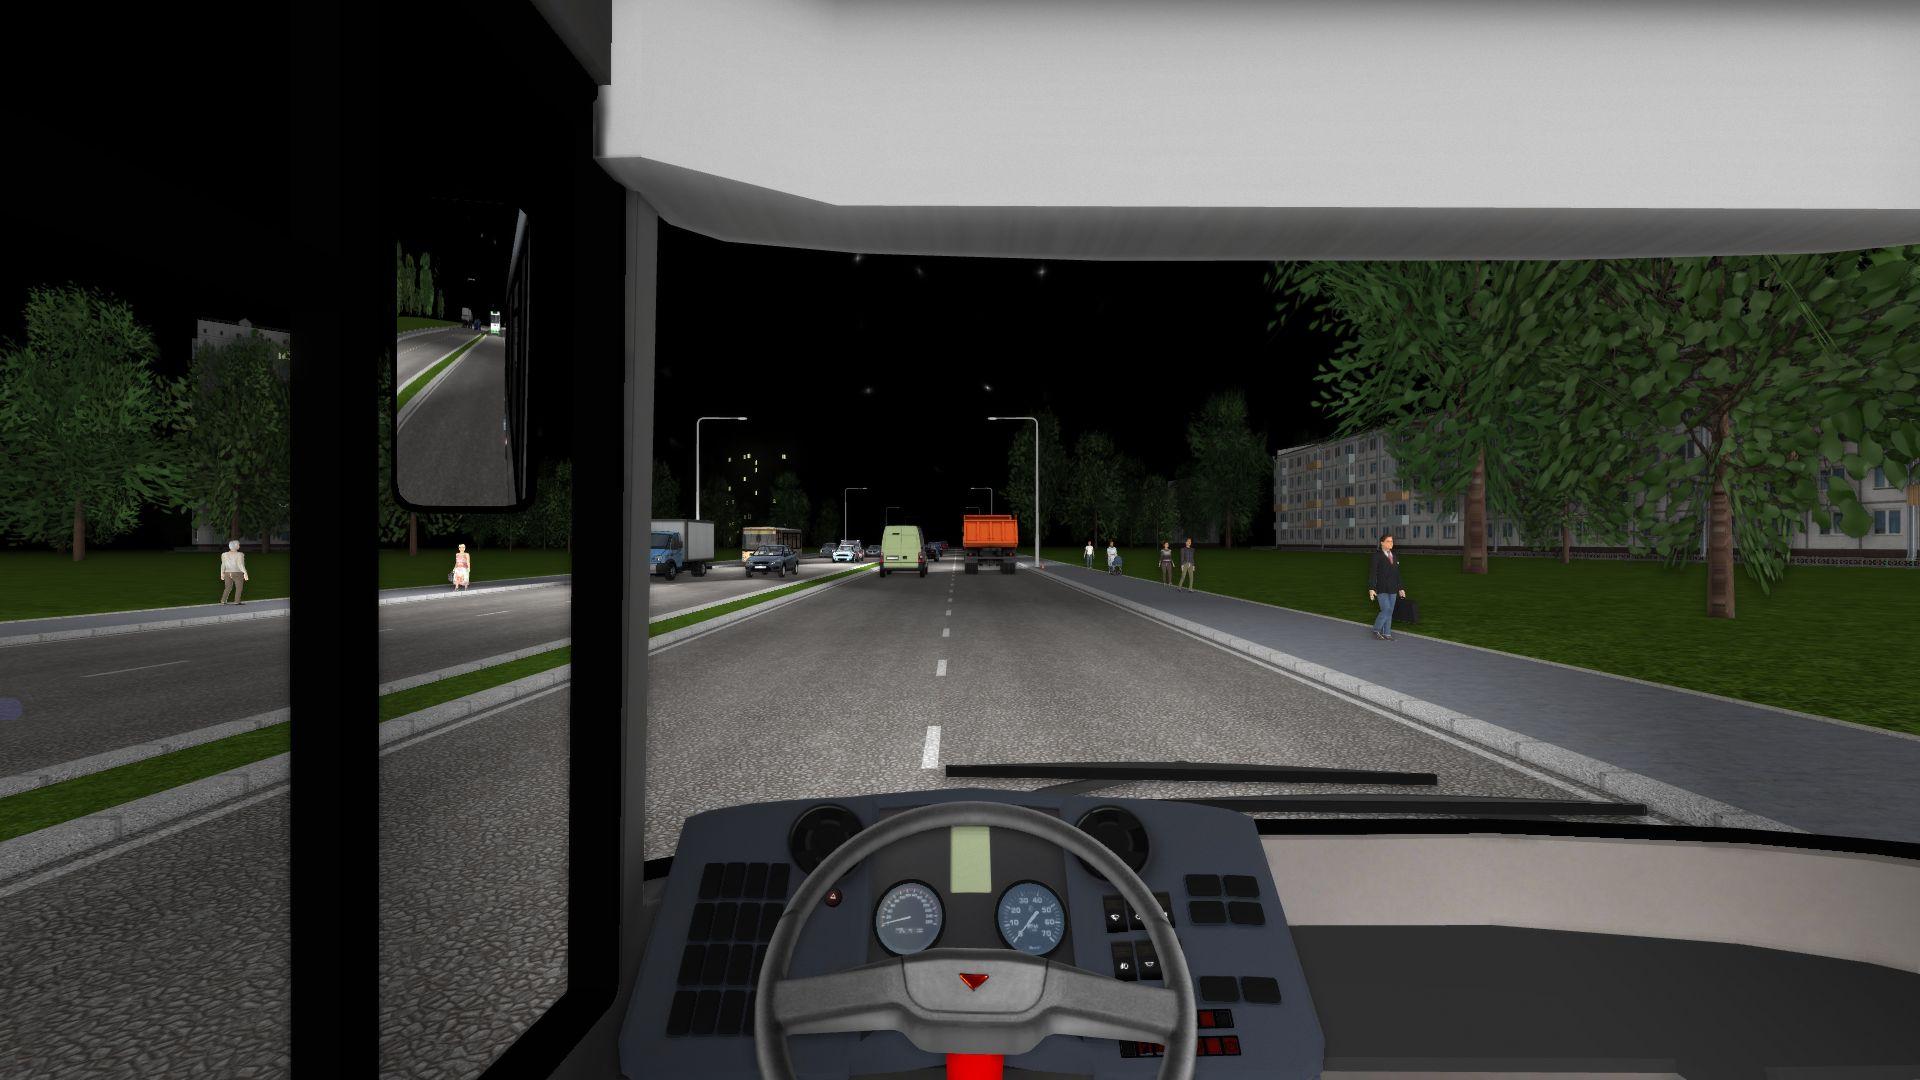 Screenshot №1 from game Drive Megapolis